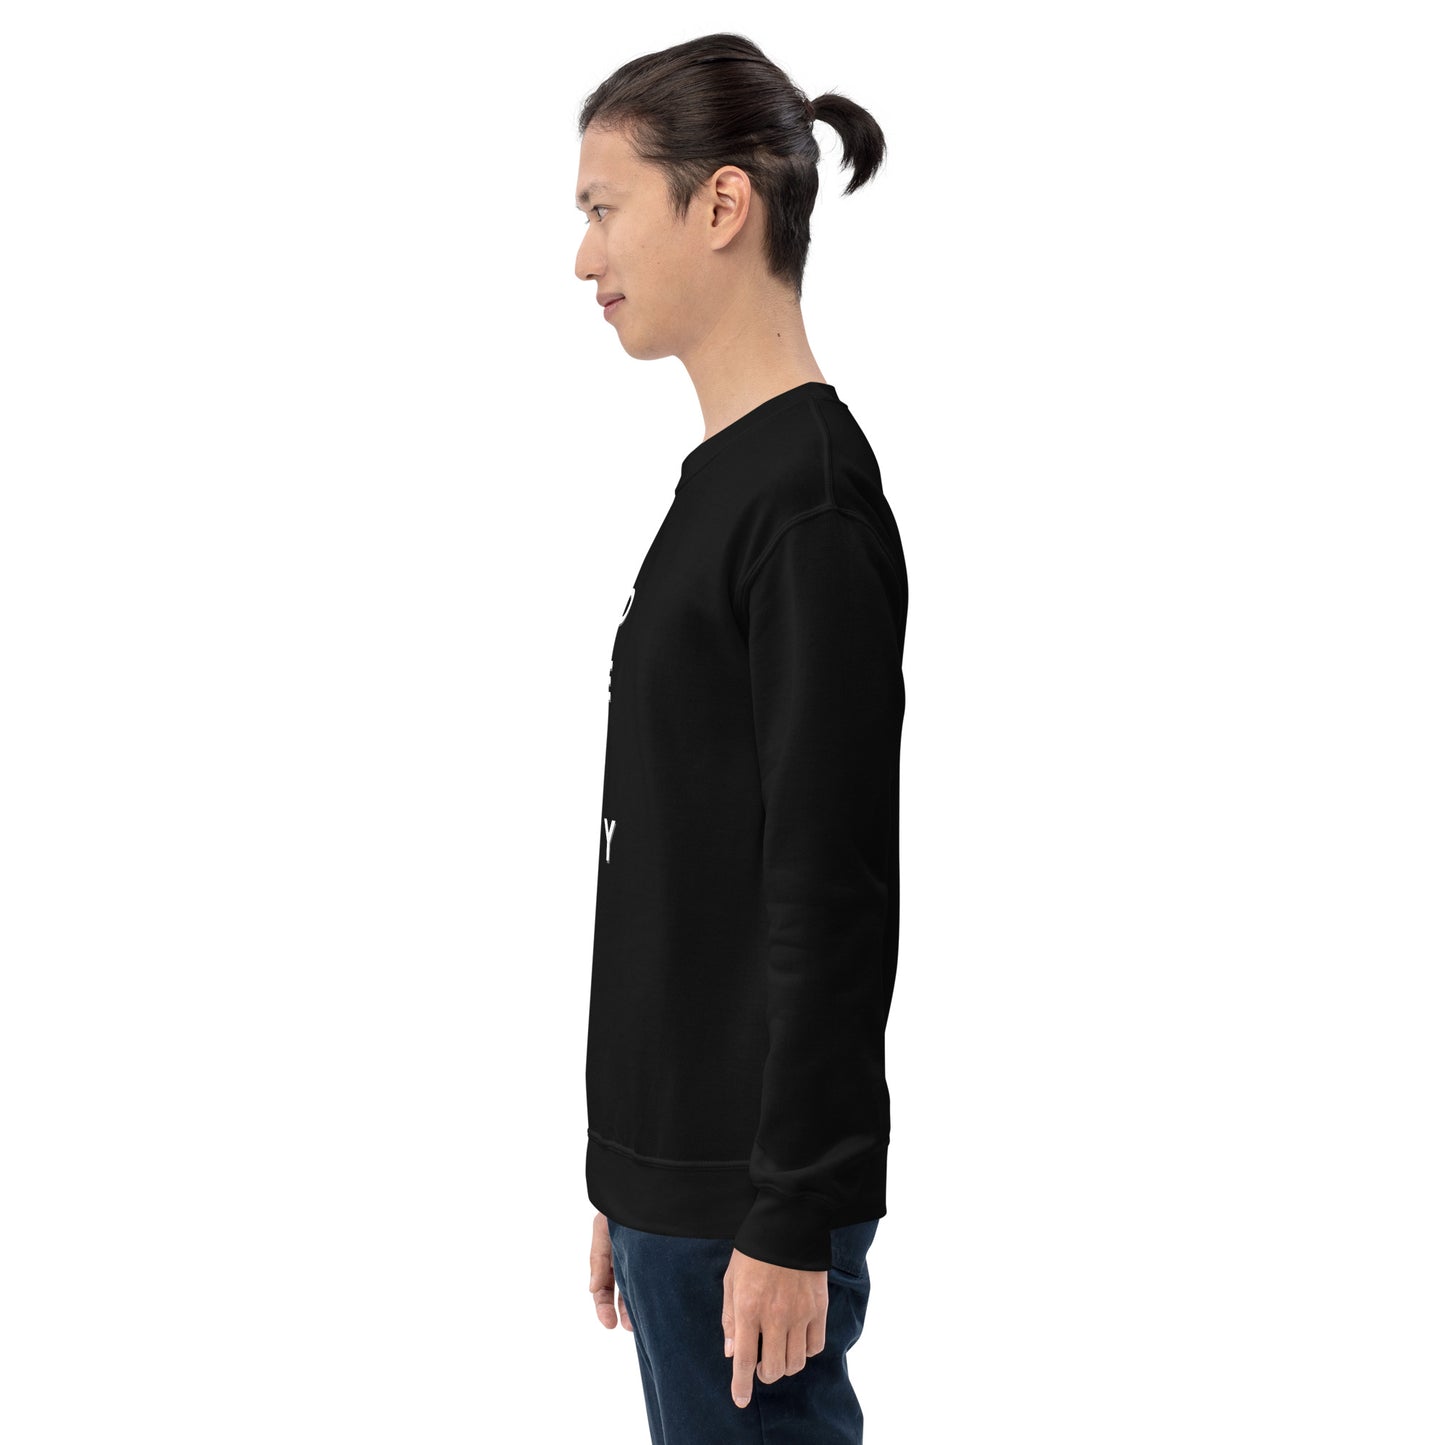 Kind, Safe, and Ready- Unisex Sweatshirt